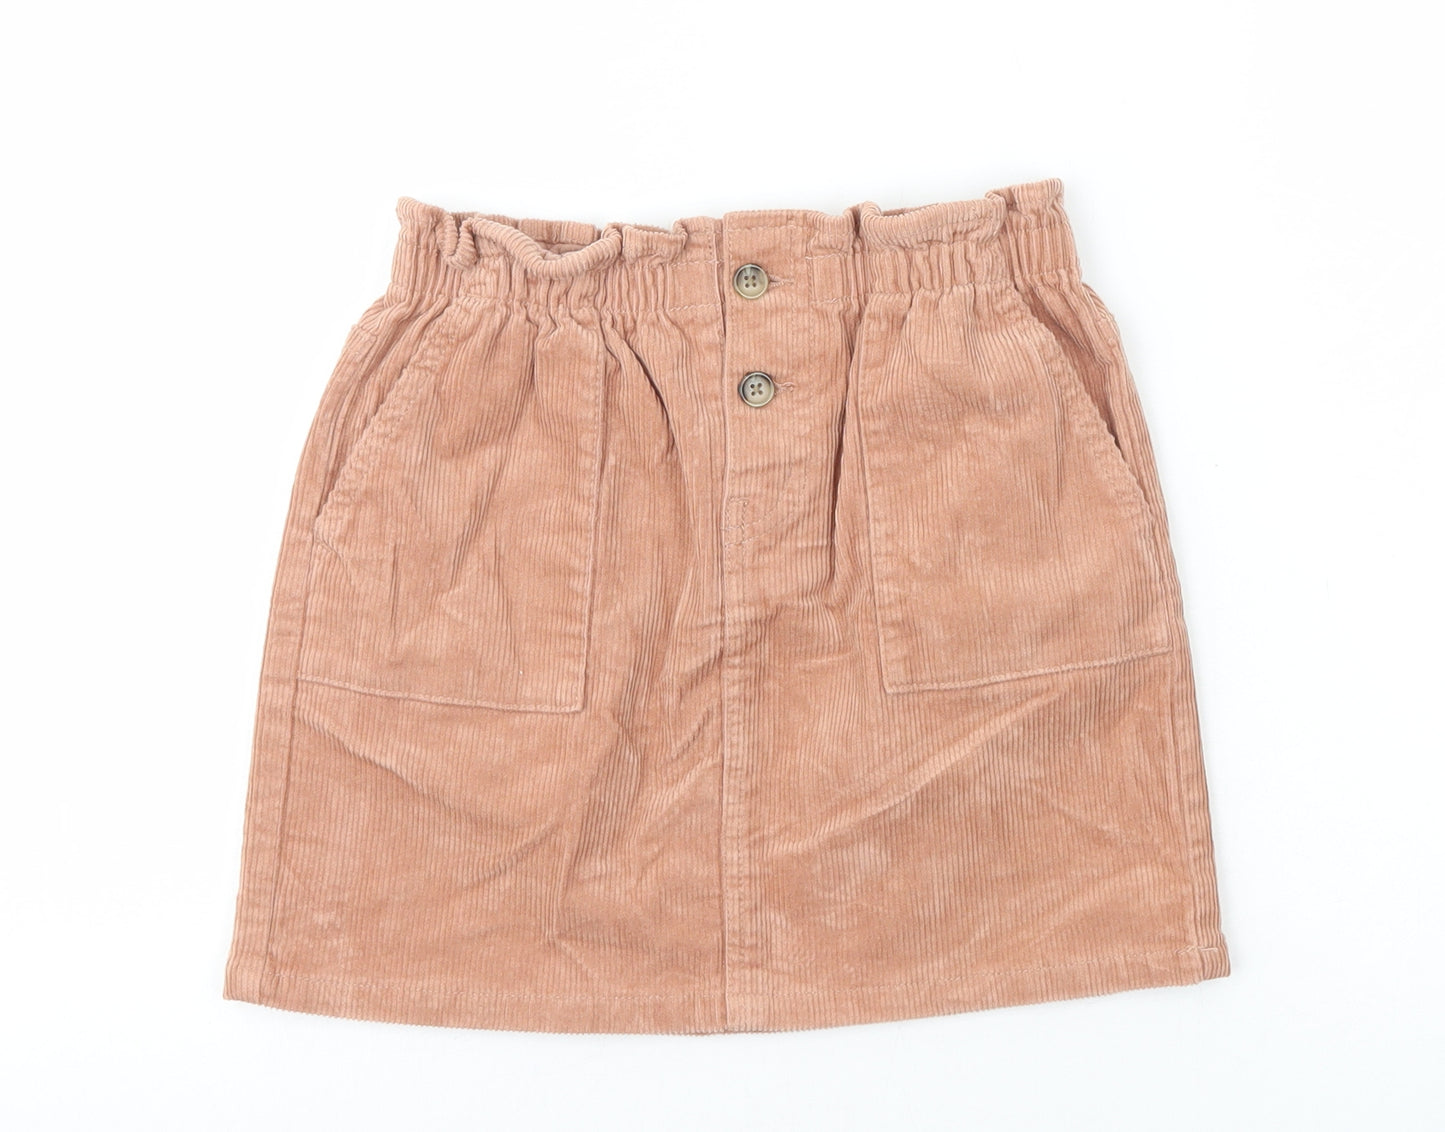 H&M Girls Orange Cotton A-Line Skirt Size 7-8 Years Regular Button